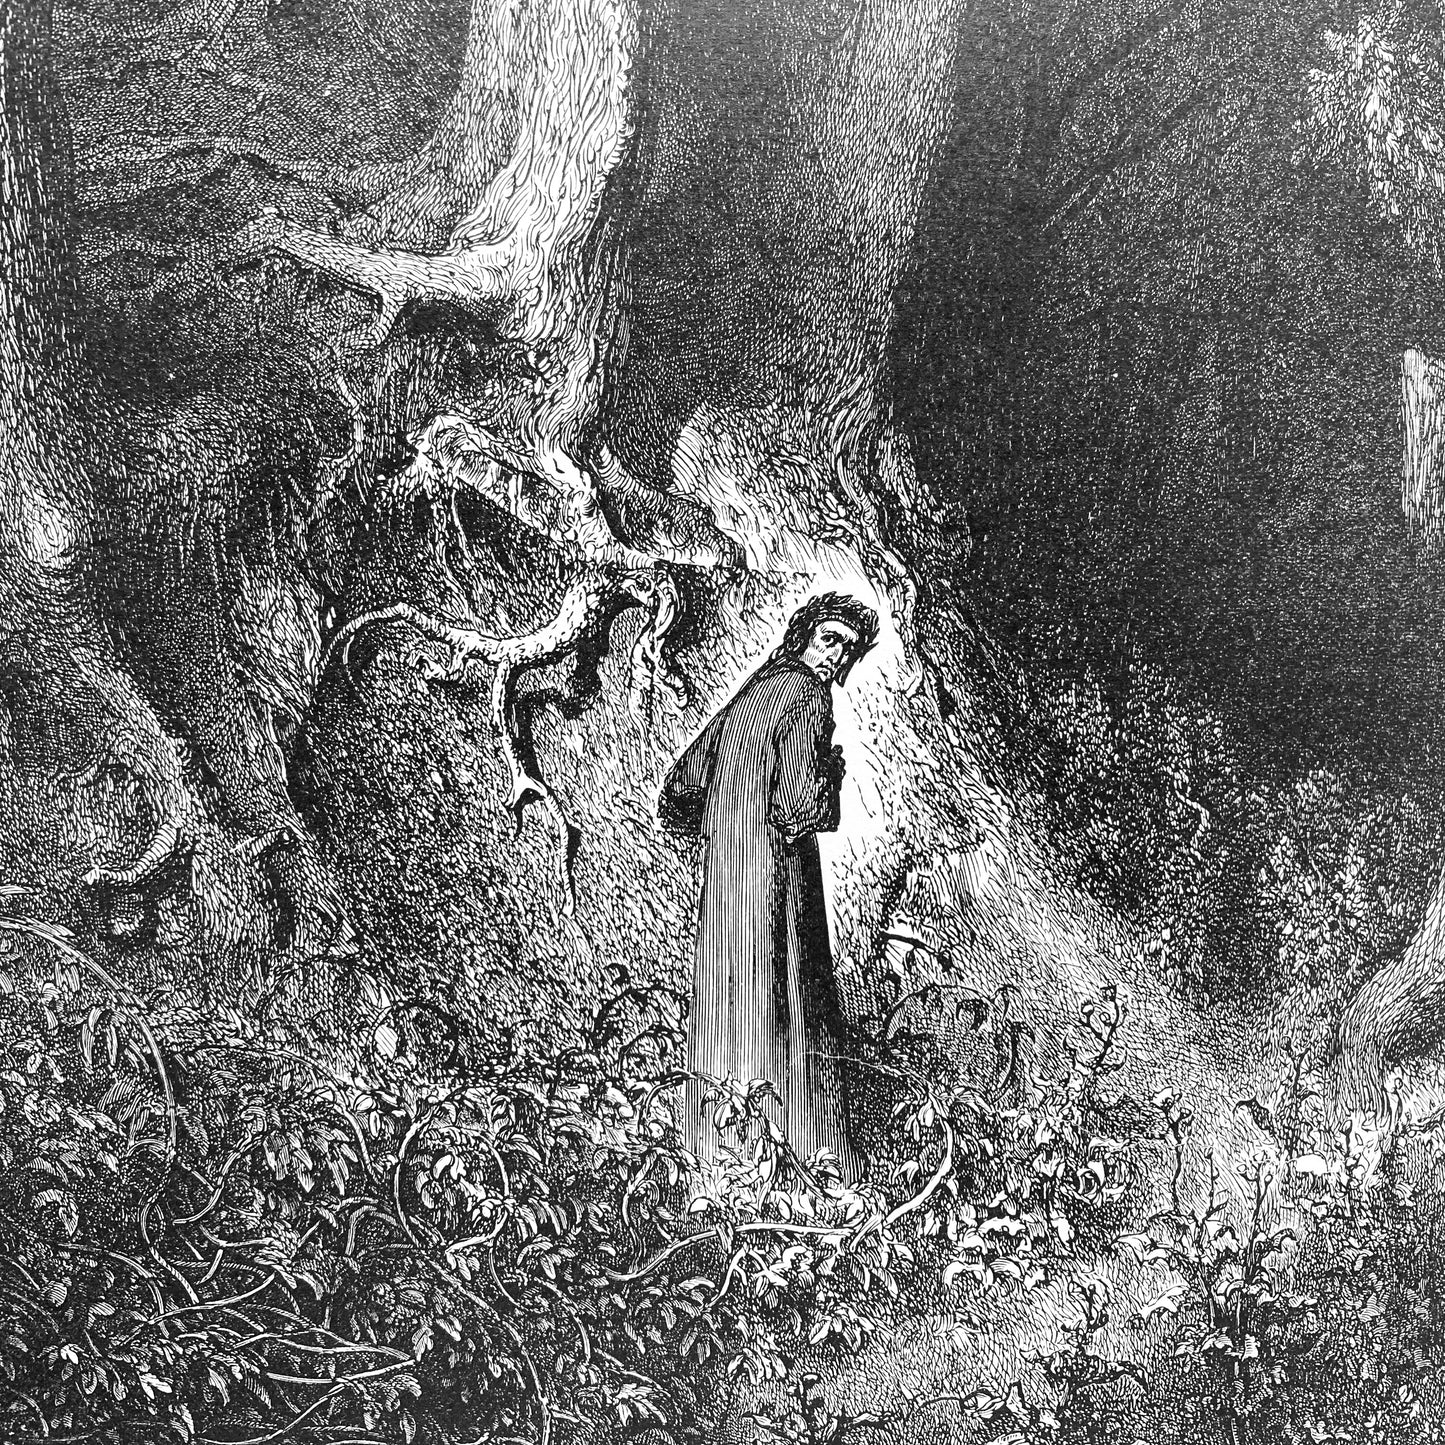 ALIGHIERI, Dante "Inferno" [Cassell & Company, c1900] Illustrated by Gustave Dore